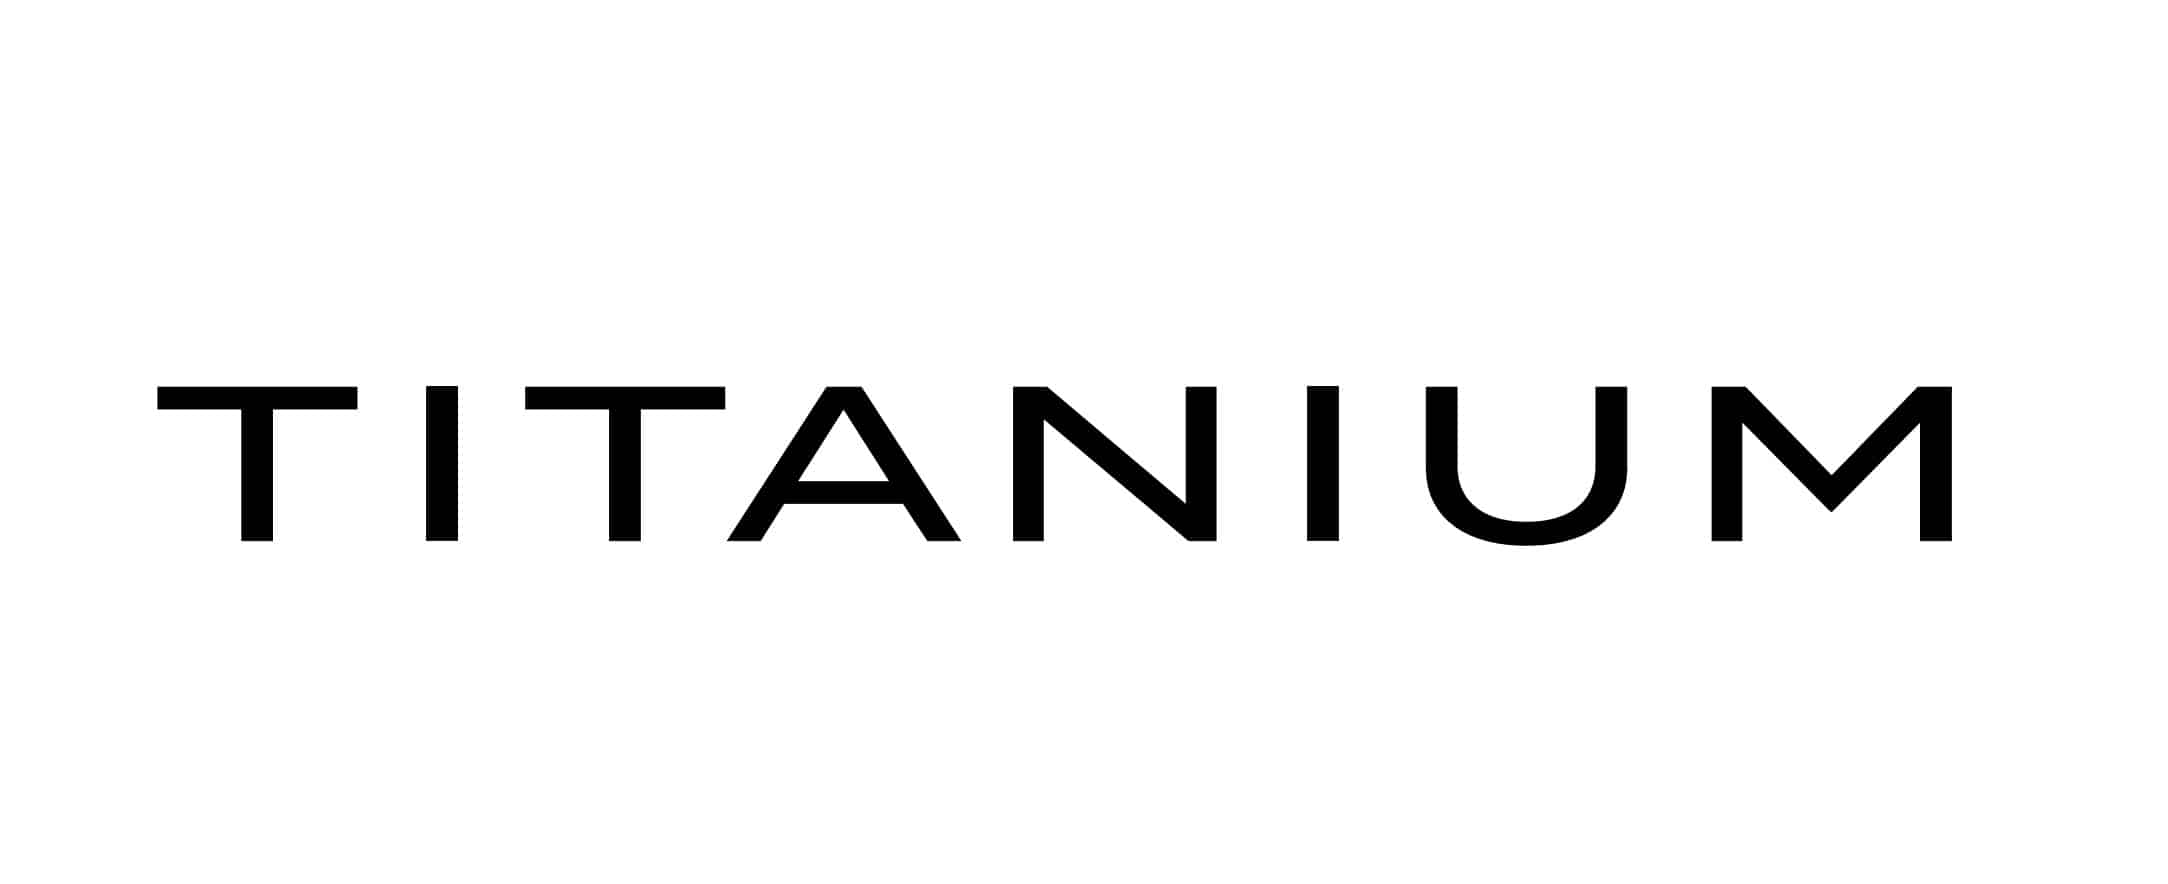 Titanium a new Expansion for UVI’s Falcon